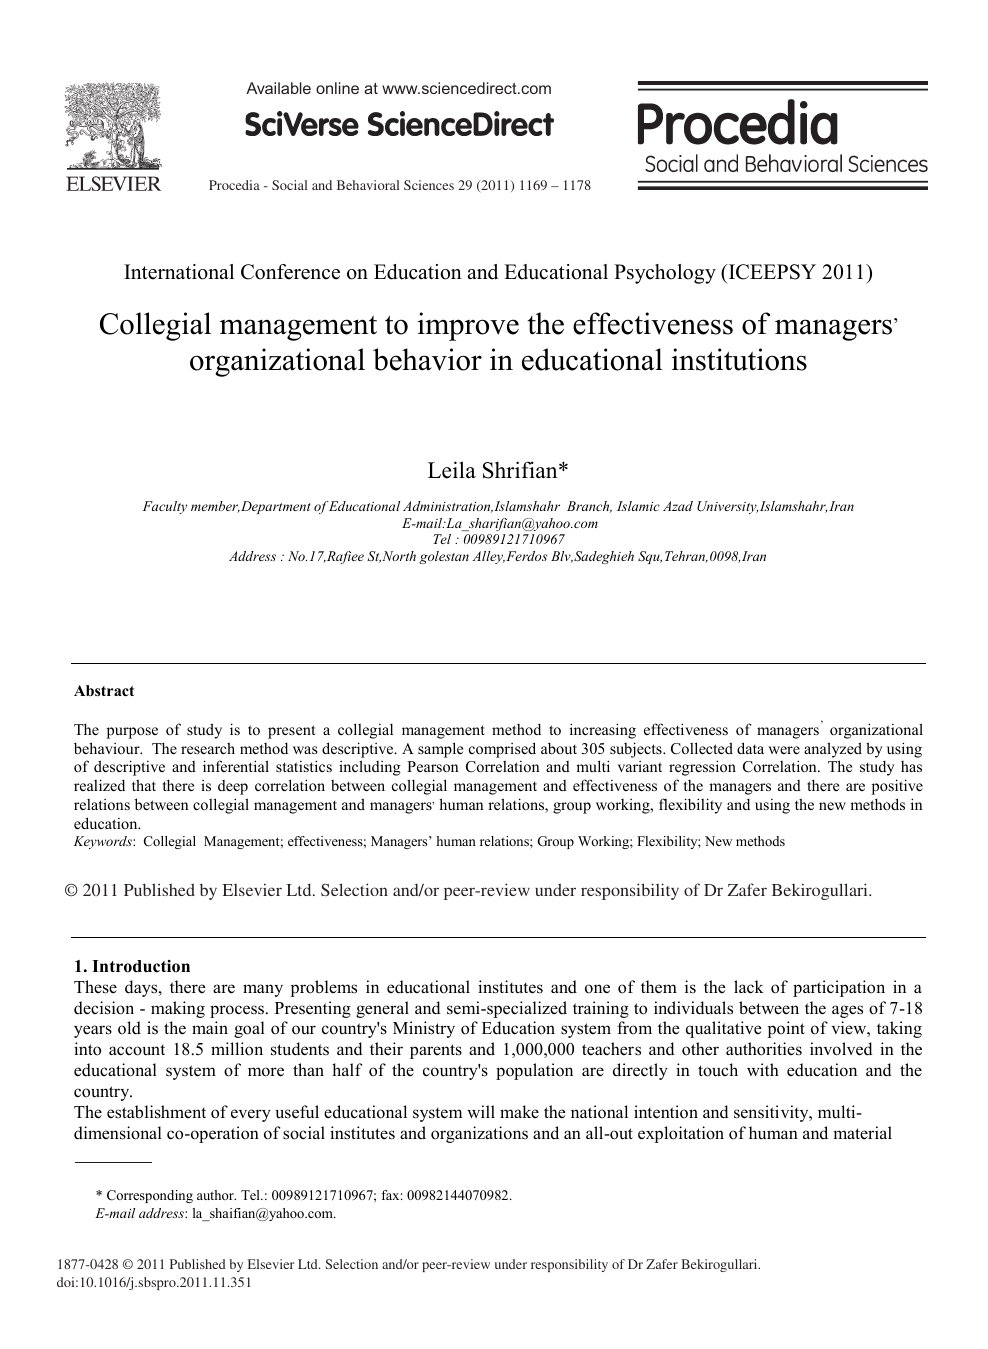 research paper on organizational behavior pdf